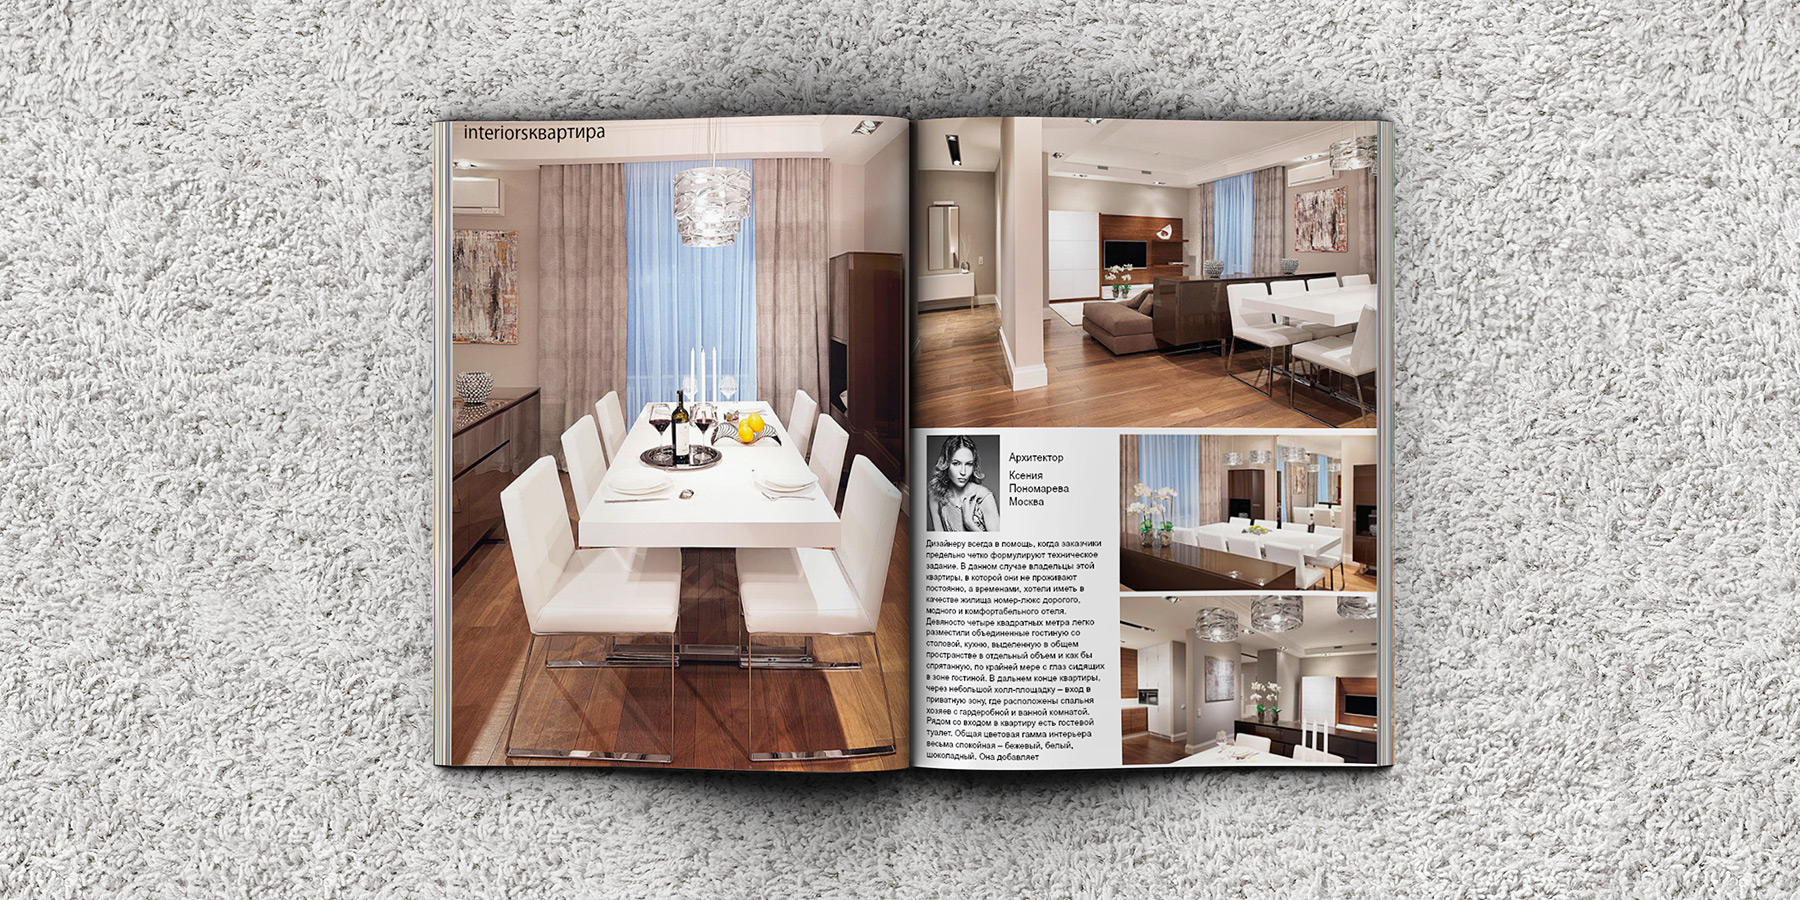 Apartment photoshoot for Interiors Magazine. Photographer: Alexander Sakulin